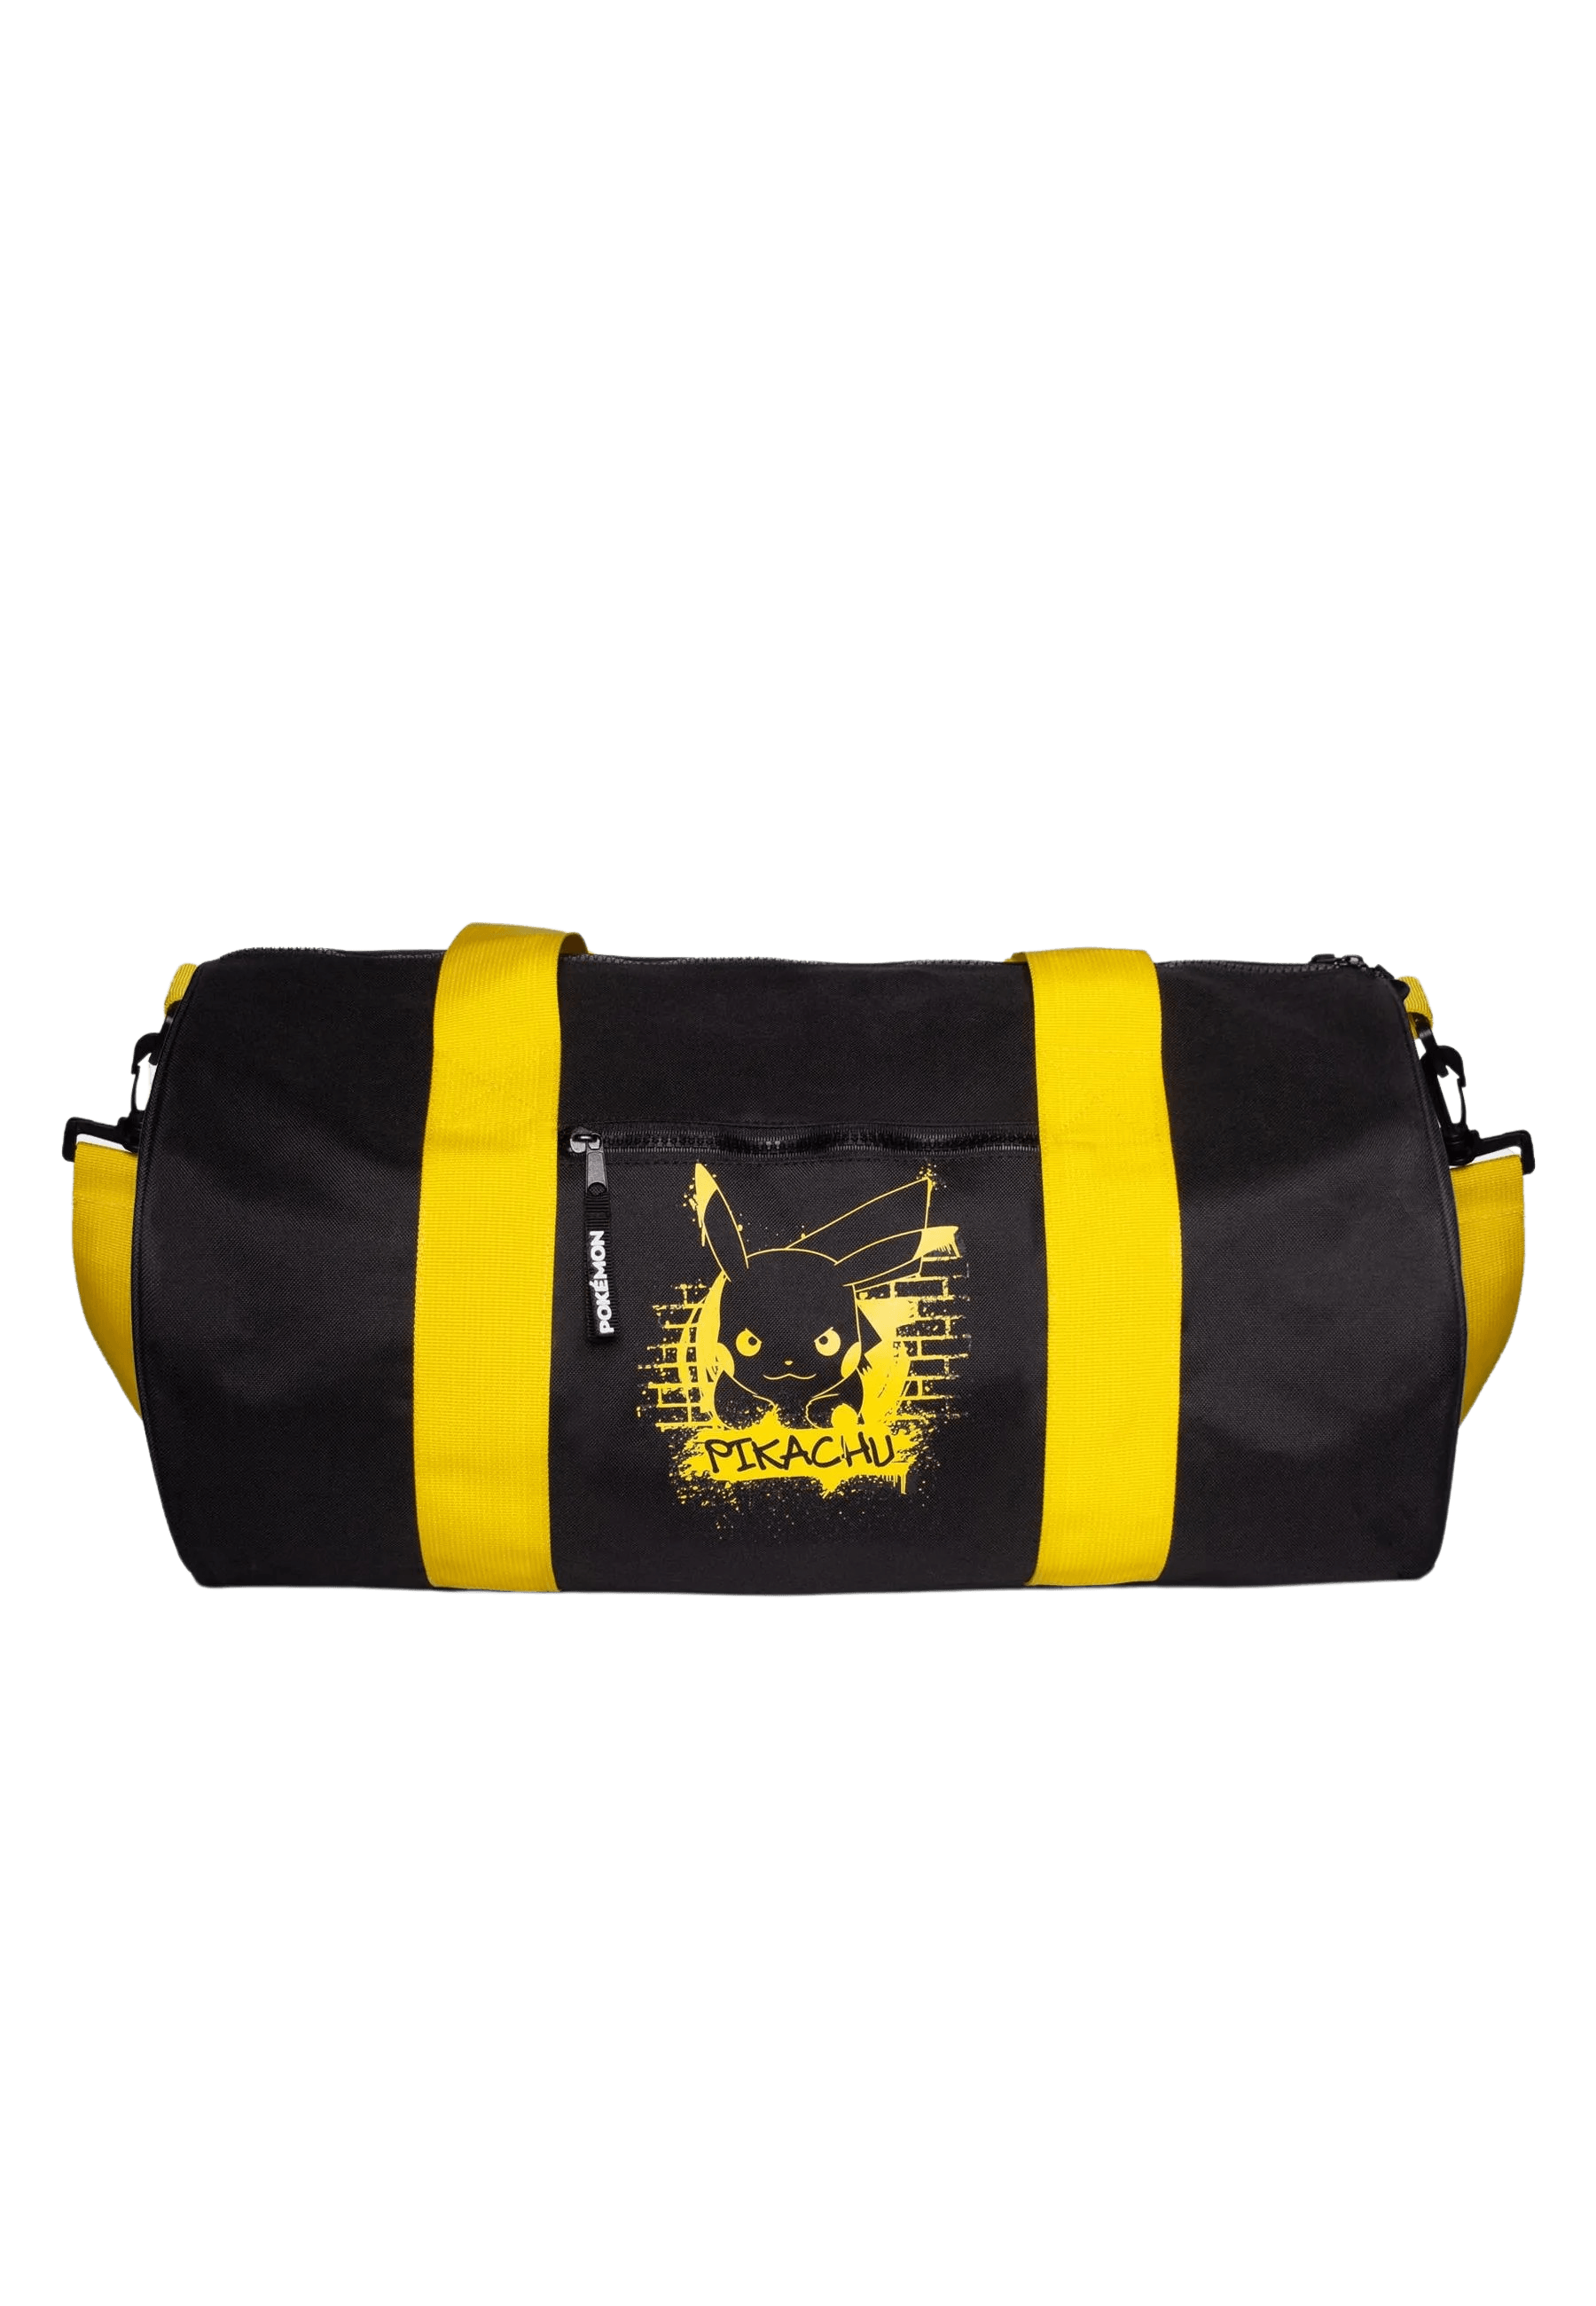 Difuzed - Pokemon - Pikachu Spray Paint Sportsbag - The Card Vault